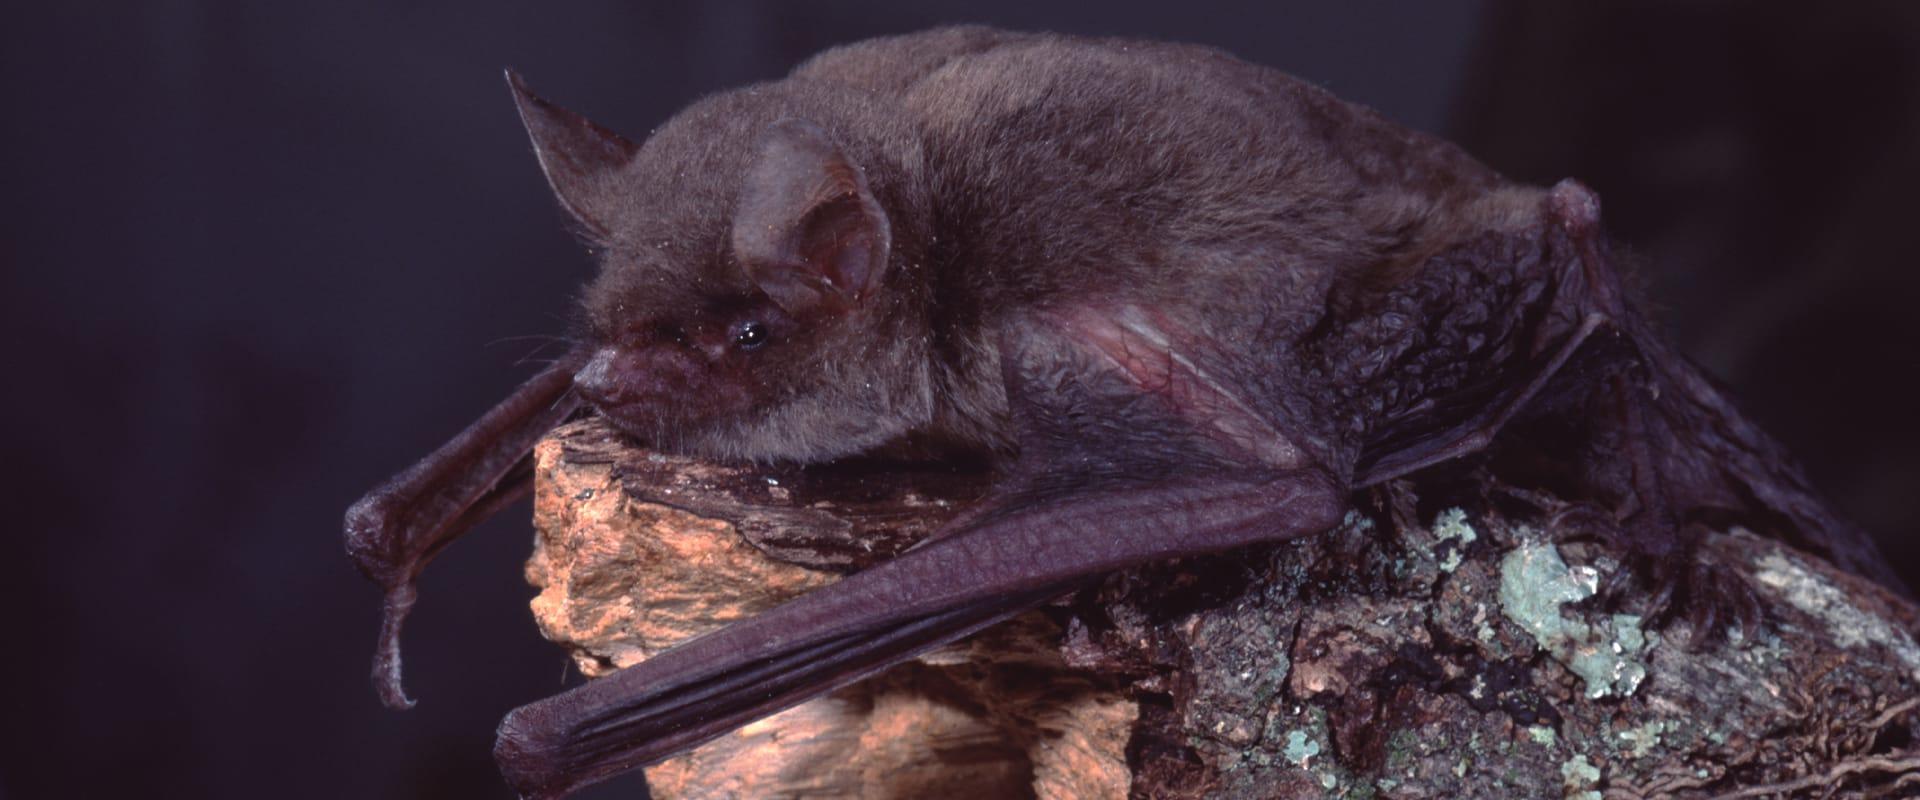 little brown bat on tree branch